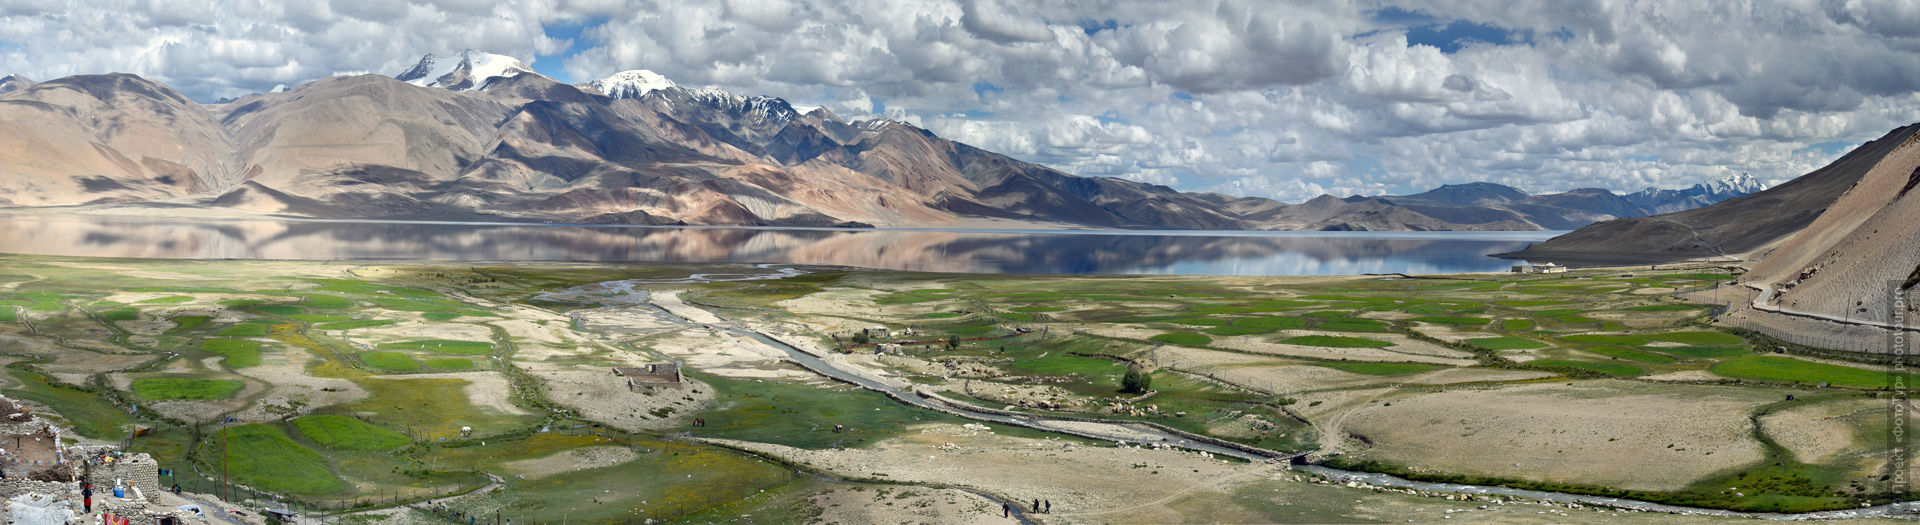 Озеро Тсо Морири, Ладакх. Путешествие Тибет Озерный-2, июль-август 2019 года.